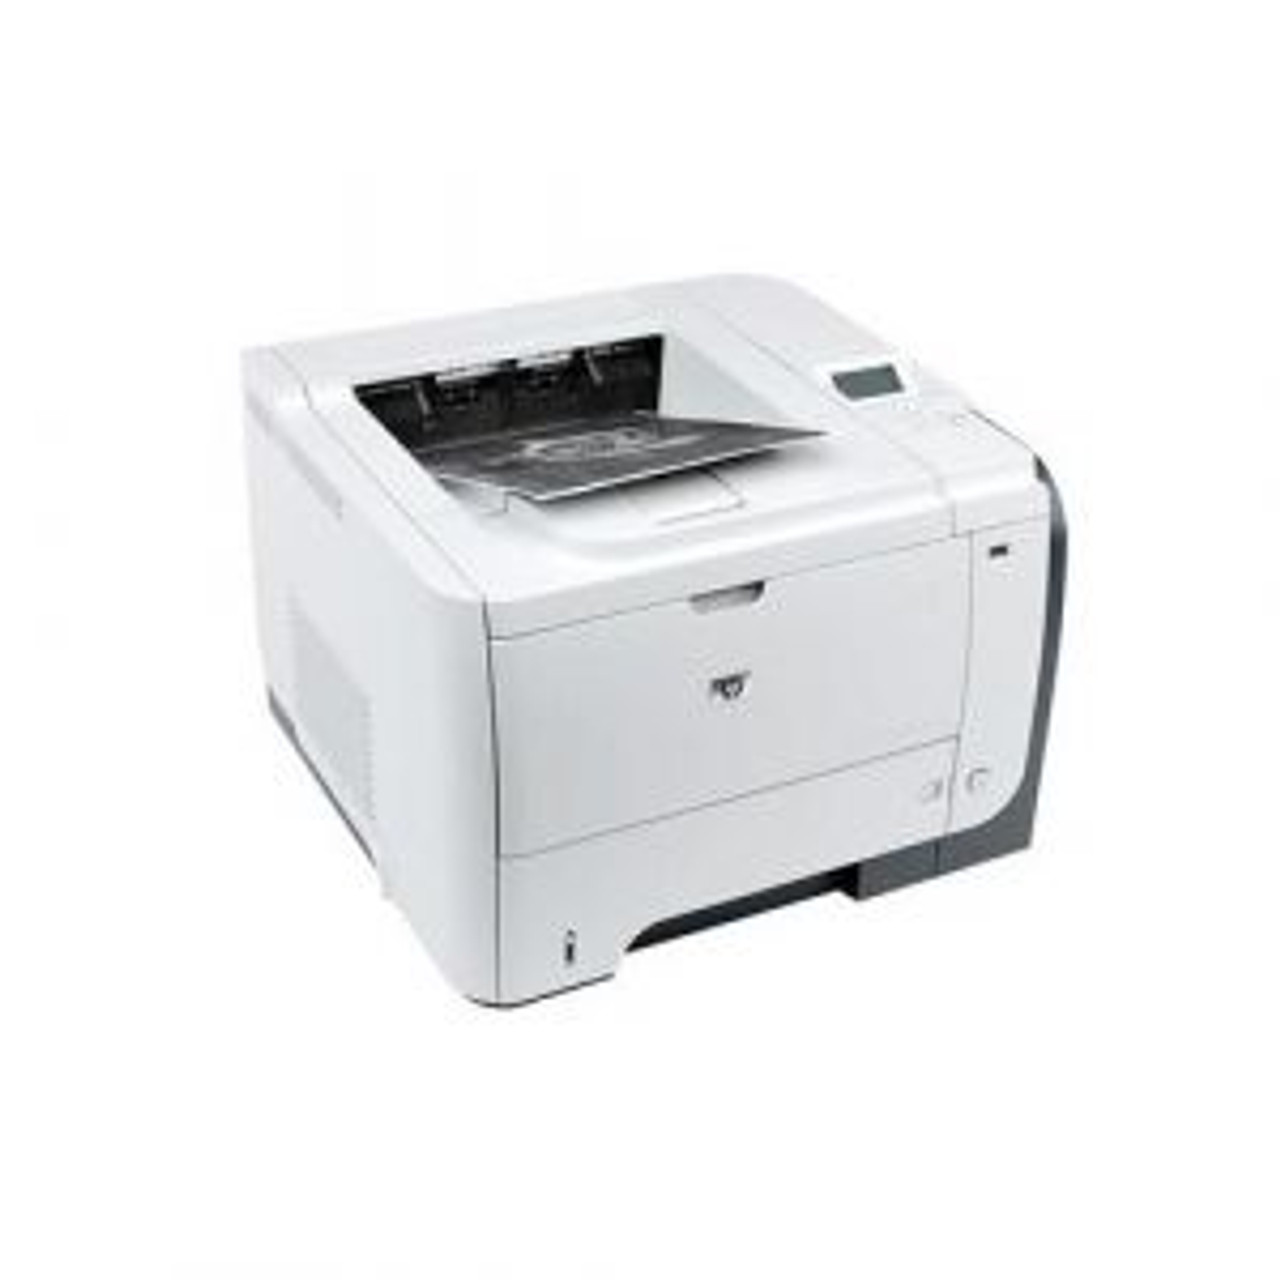 Printers & Cartridges,Printer,HP,LJ1300